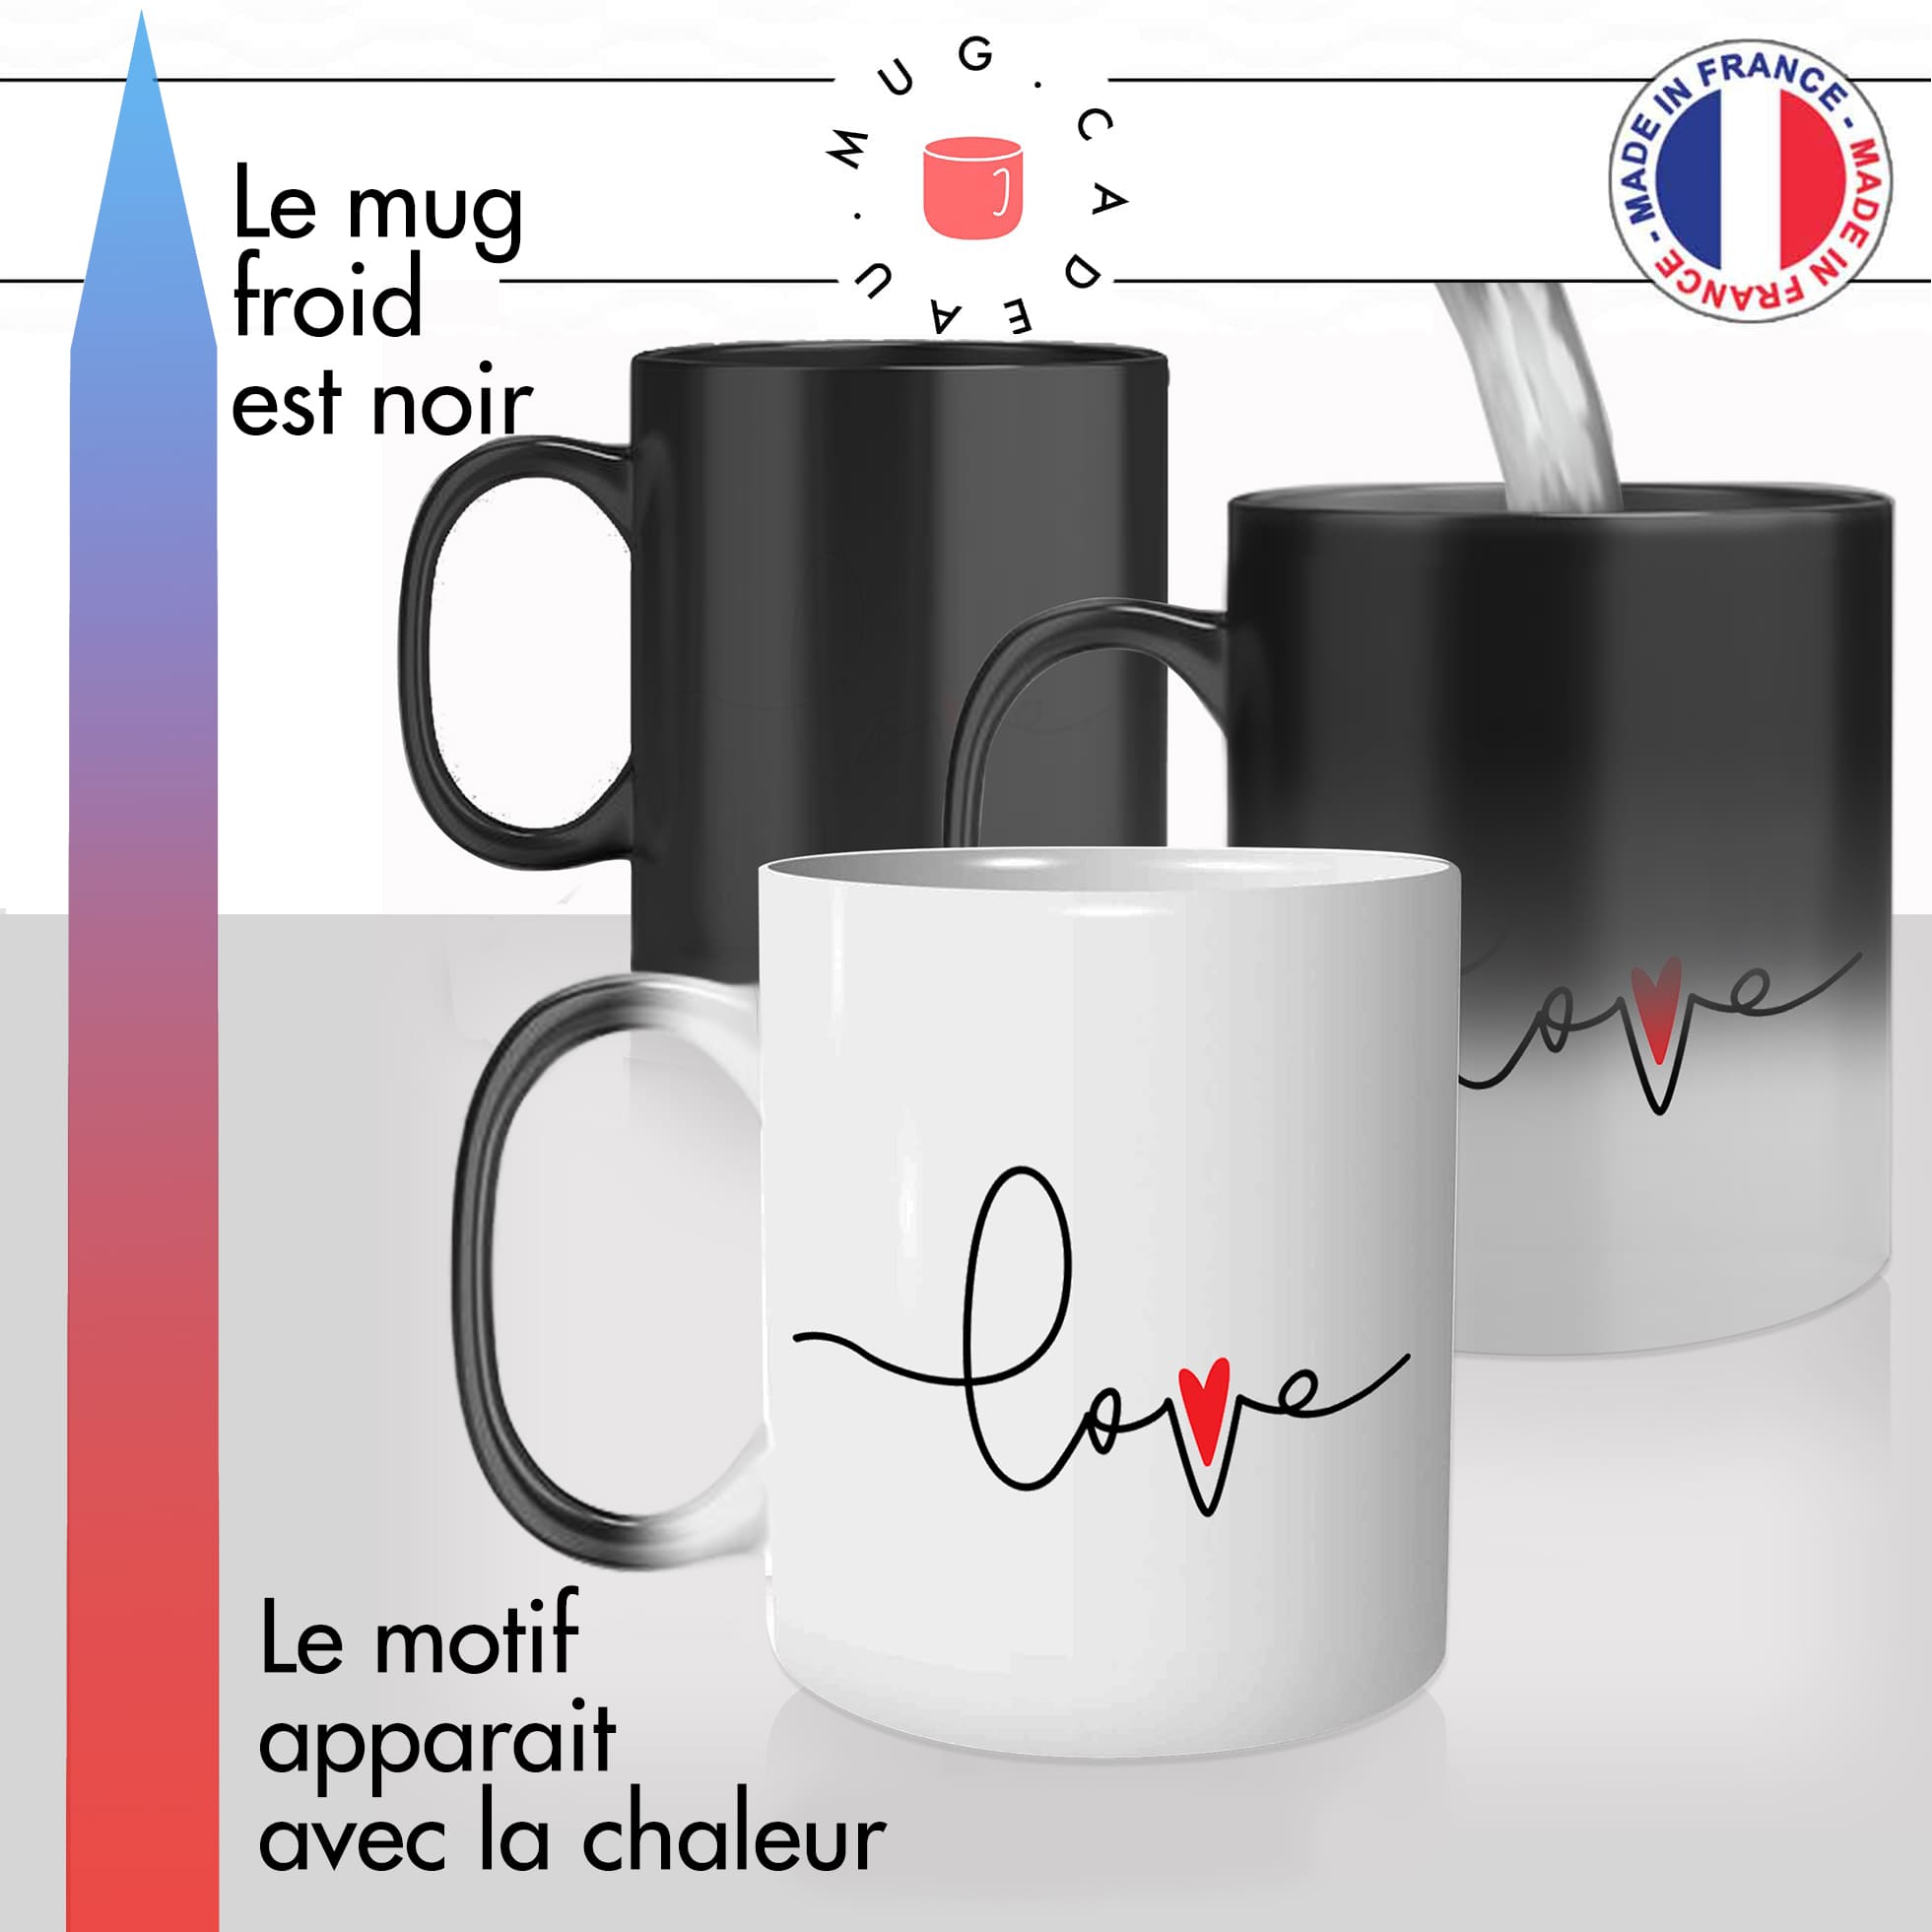 mug magique thermoréactif thermo chauffant personnalisé love amour en anglais coeur couple mignon personnalisable cadeau original